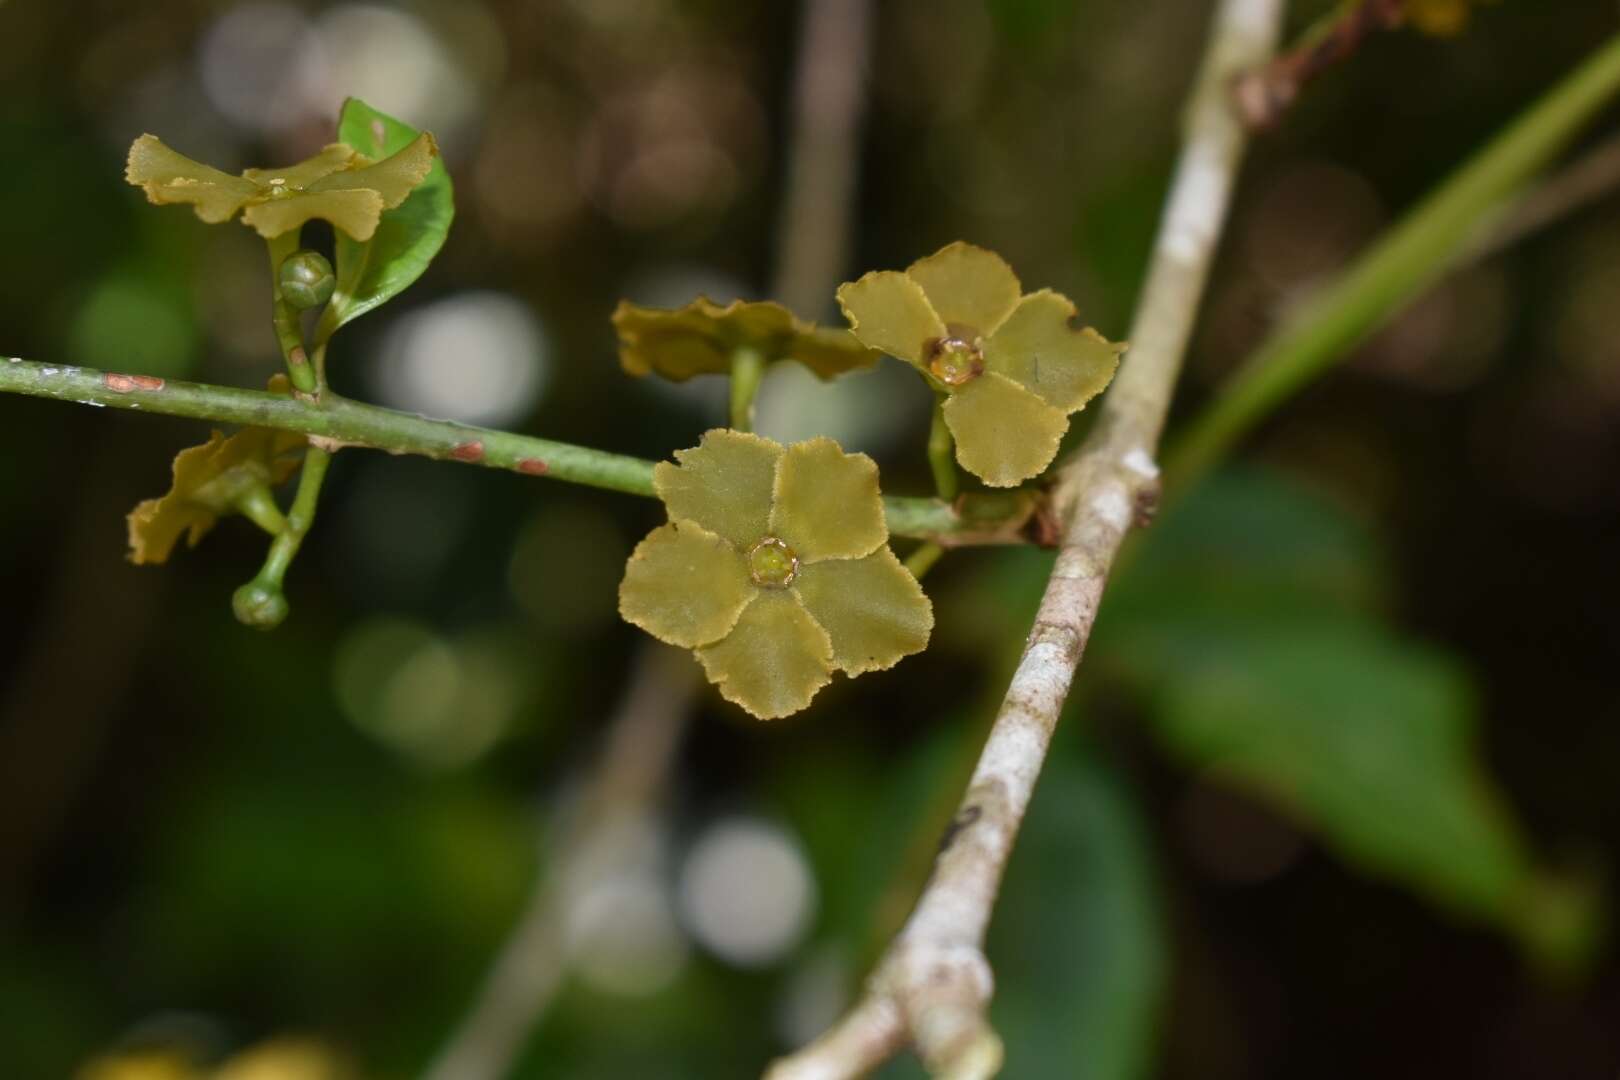 Image of Salacia arborea Peyr.